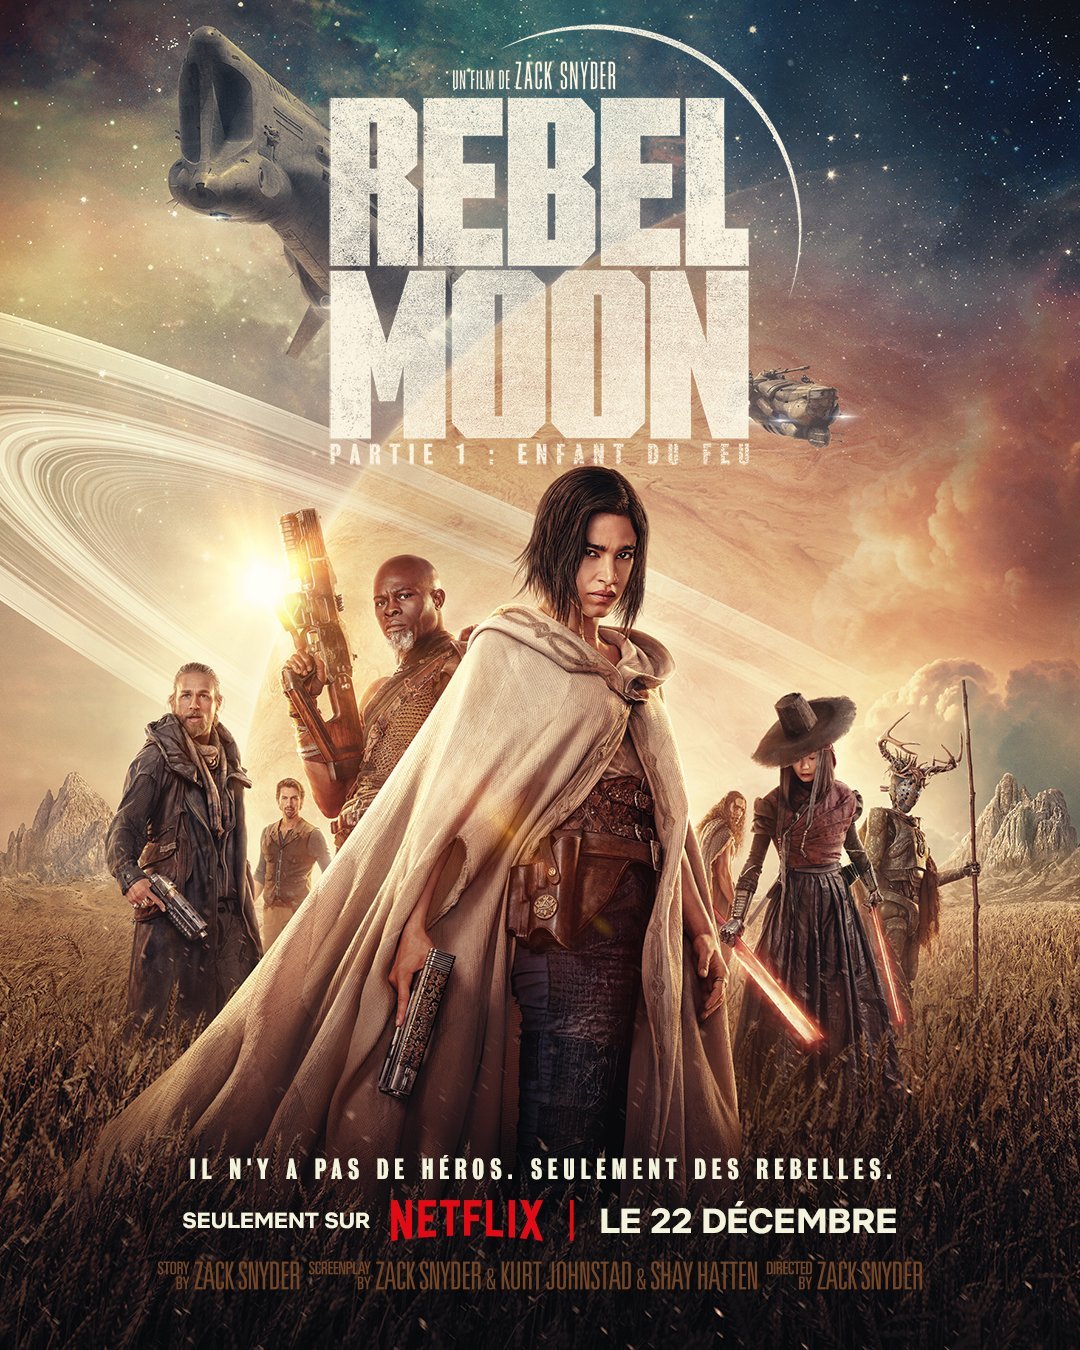 Rebel Moon: Partie 1 - Enfant du feu streaming